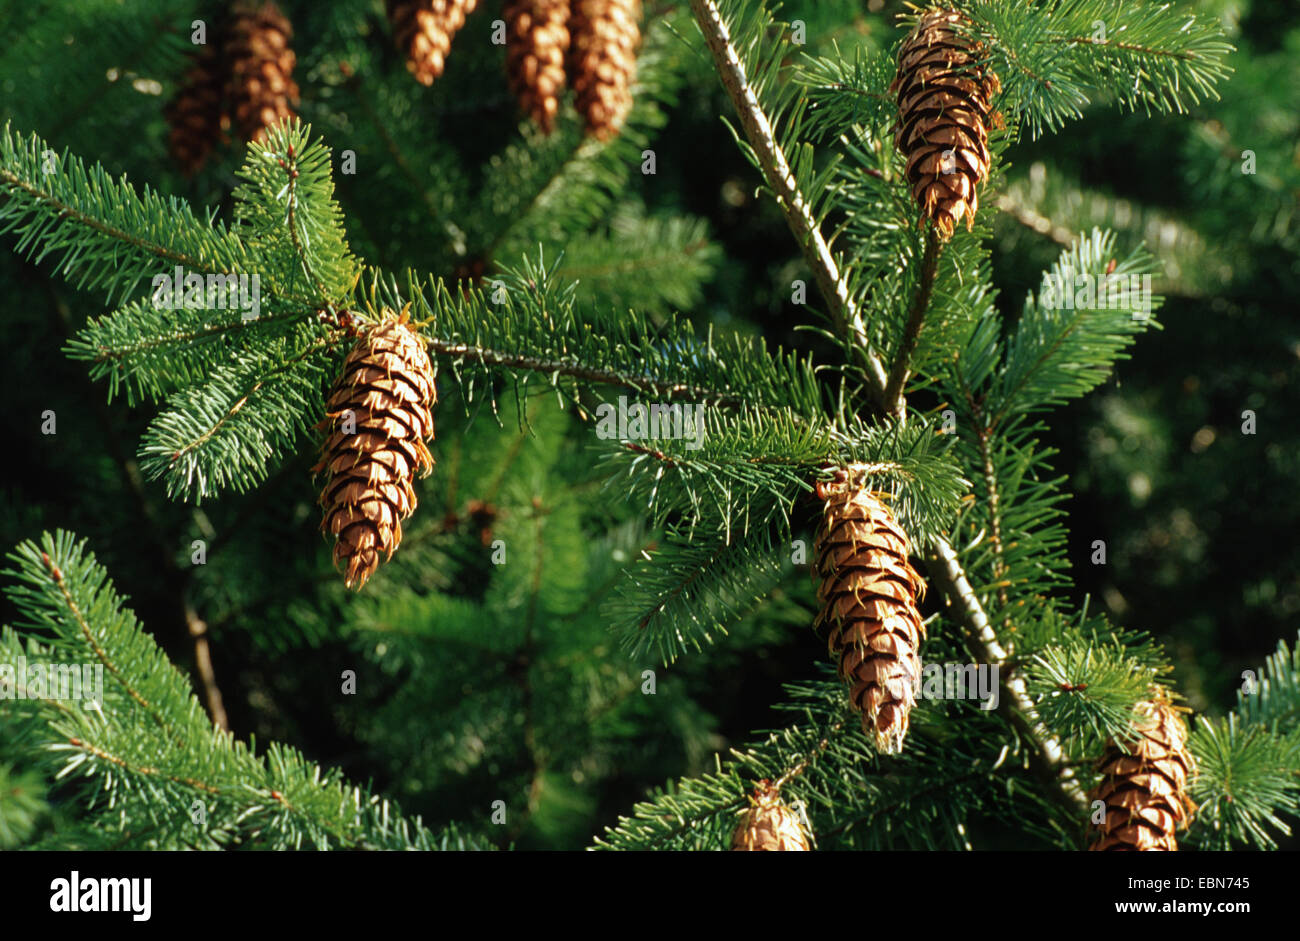 Douglas fir (Pseudotsuga menziesii), branch with cones Stock Photo